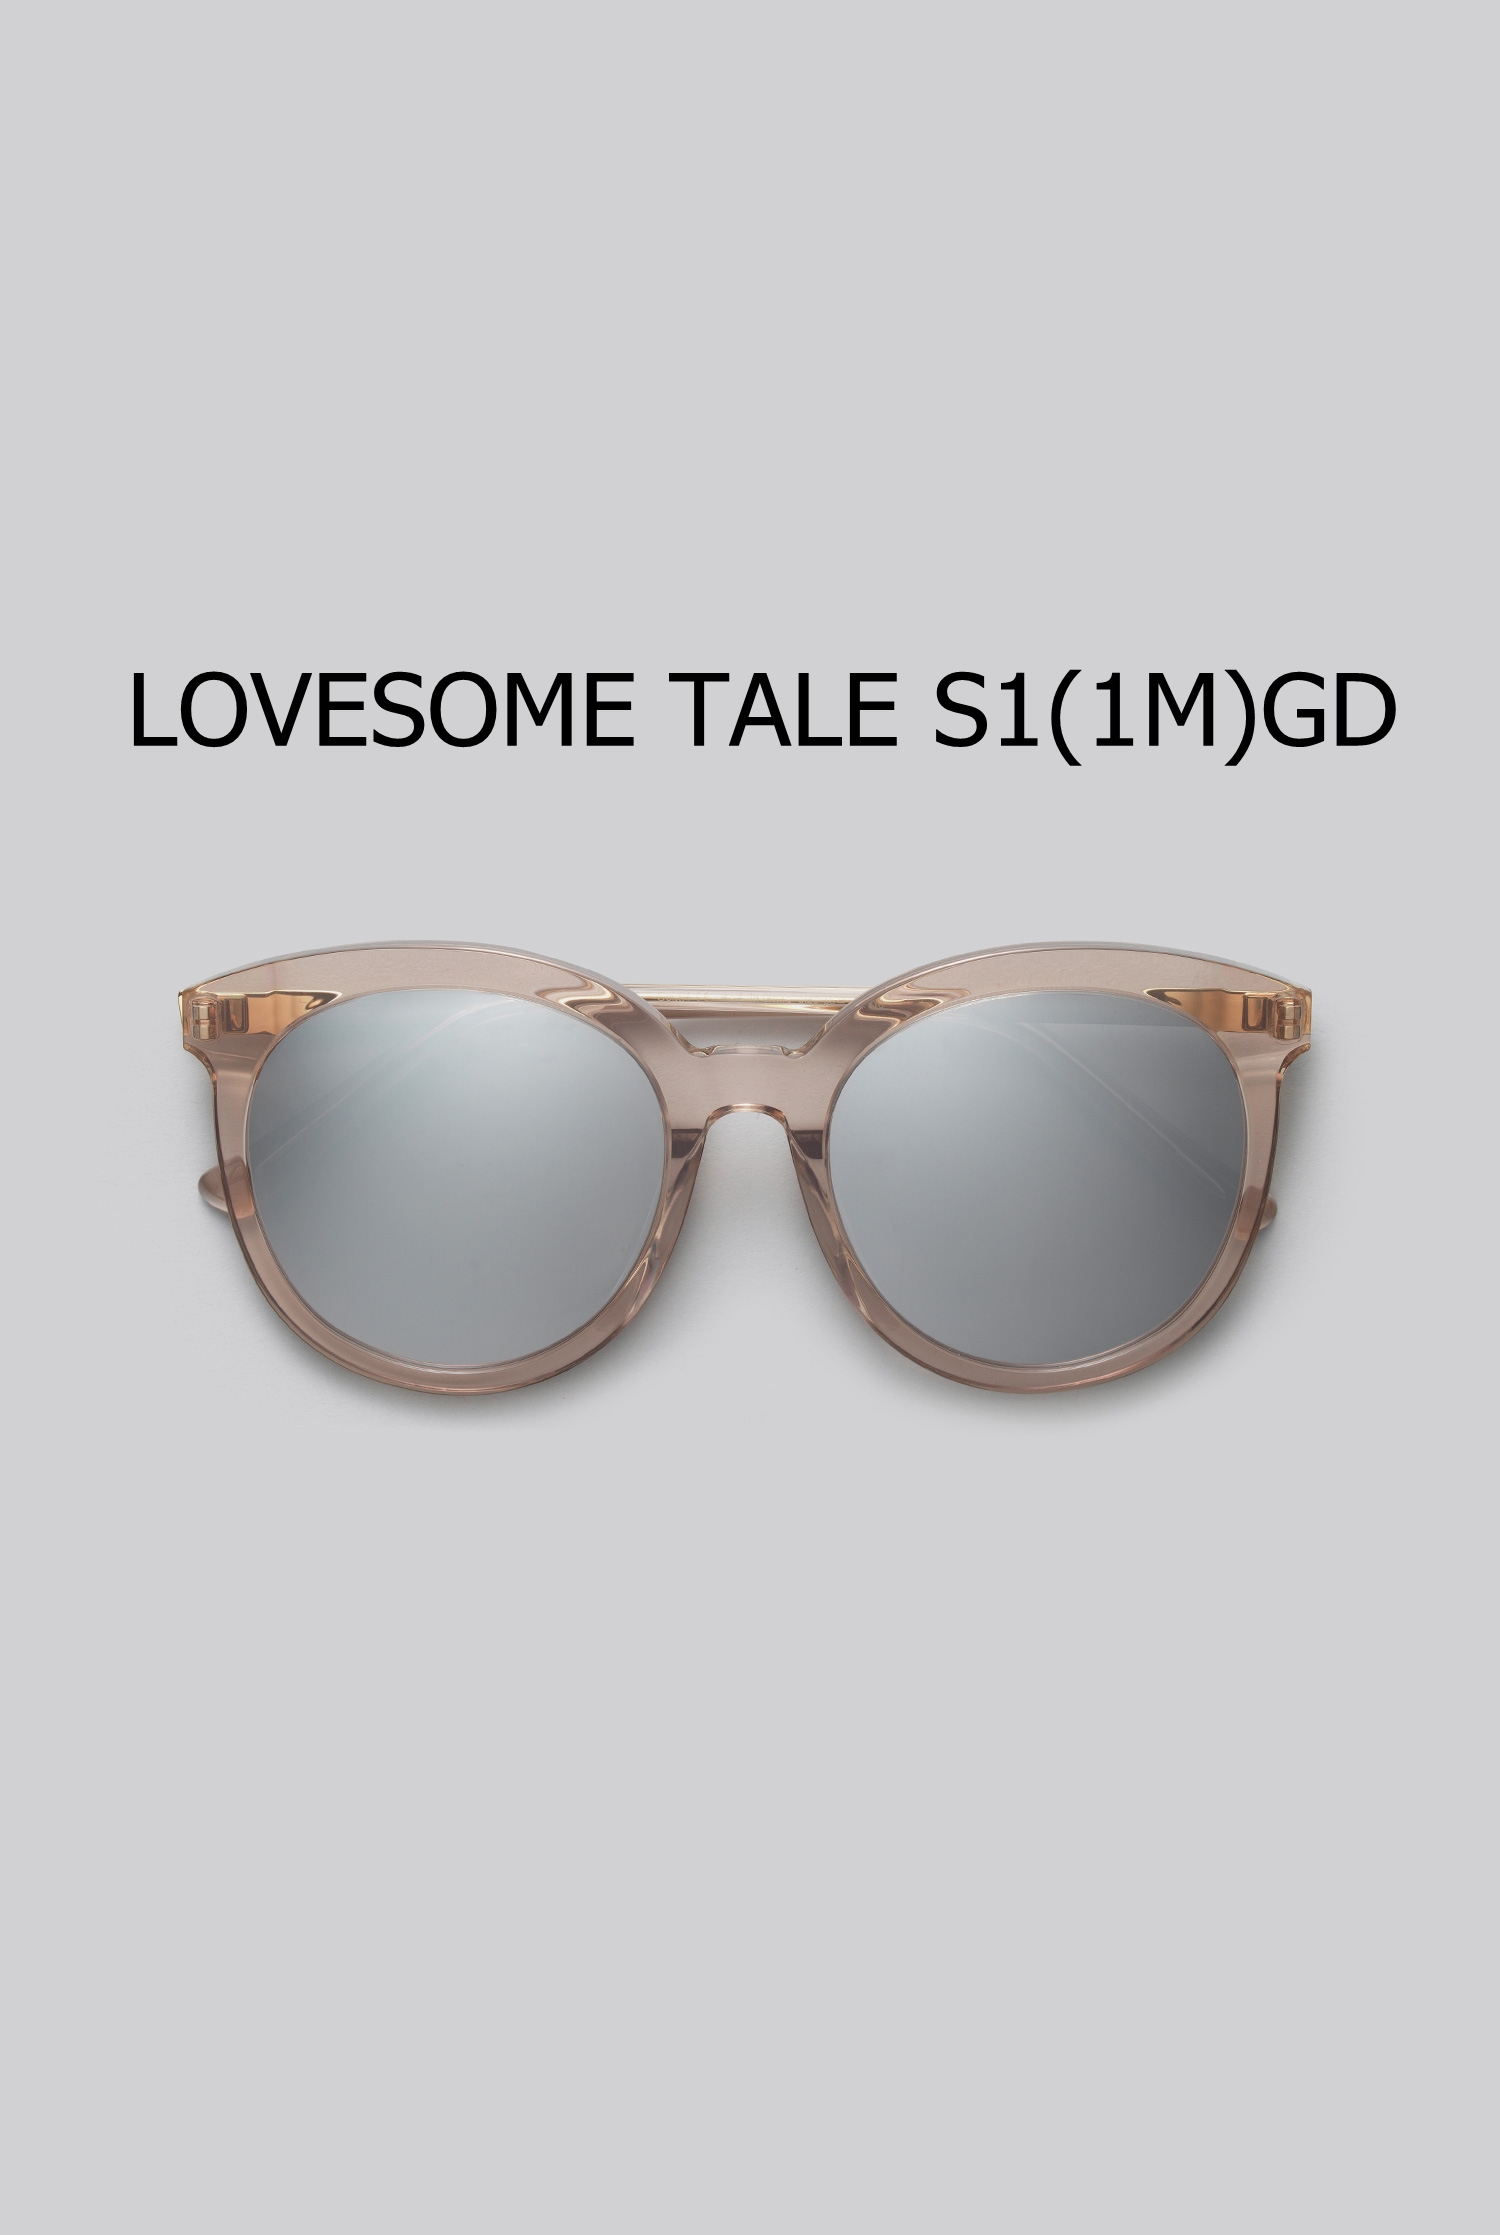 LOVESOME TALE S1(1M)GD